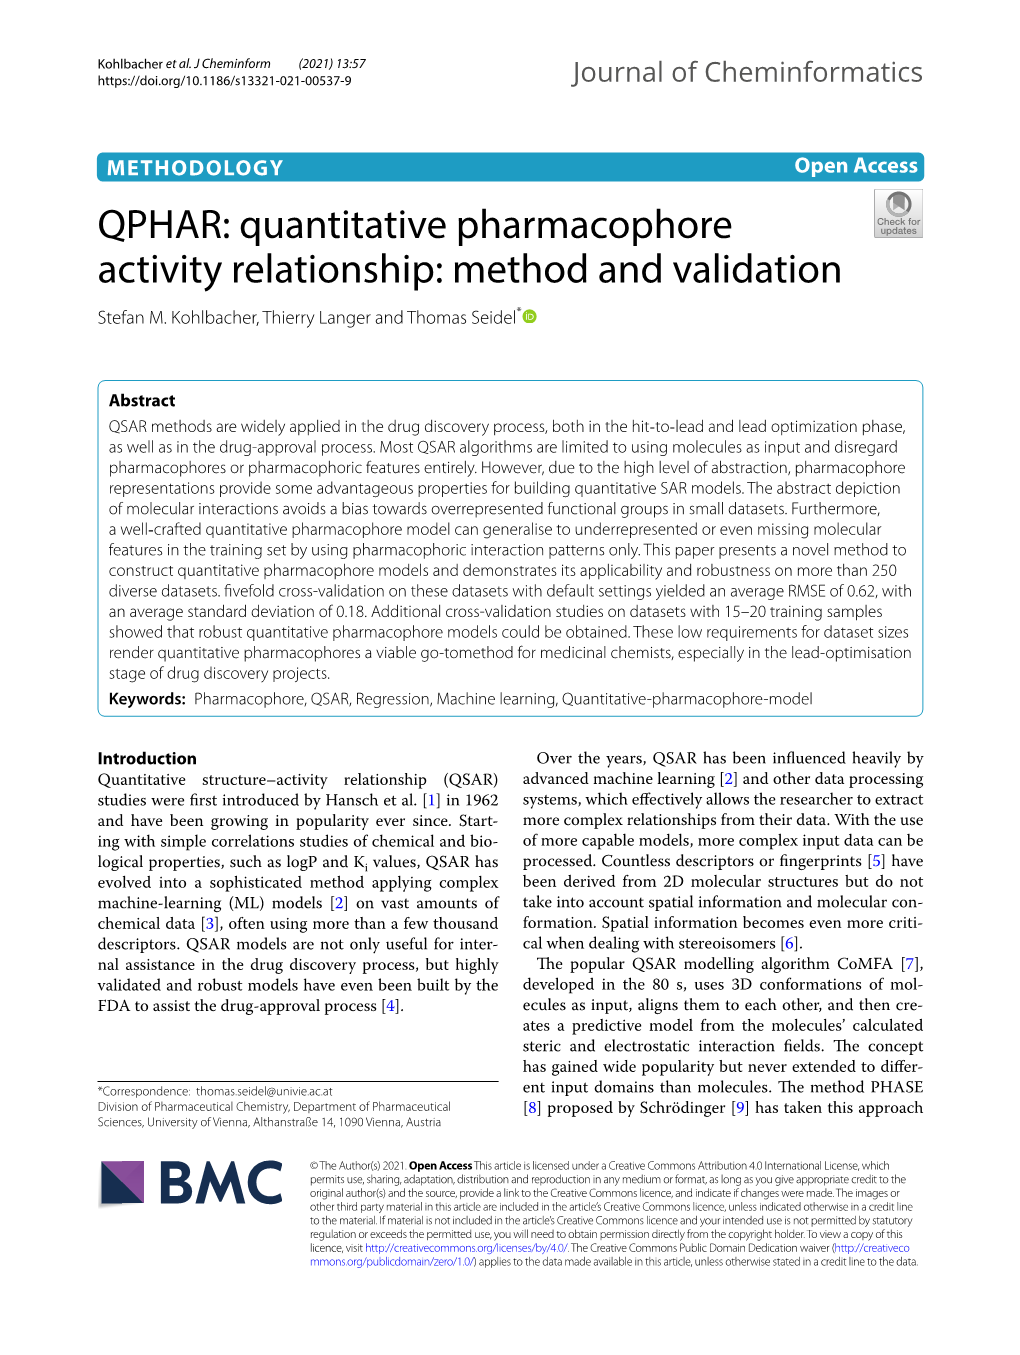 QPHAR: Quantitative Pharmacophore Activity Relationship: Method and Validation Stefan M